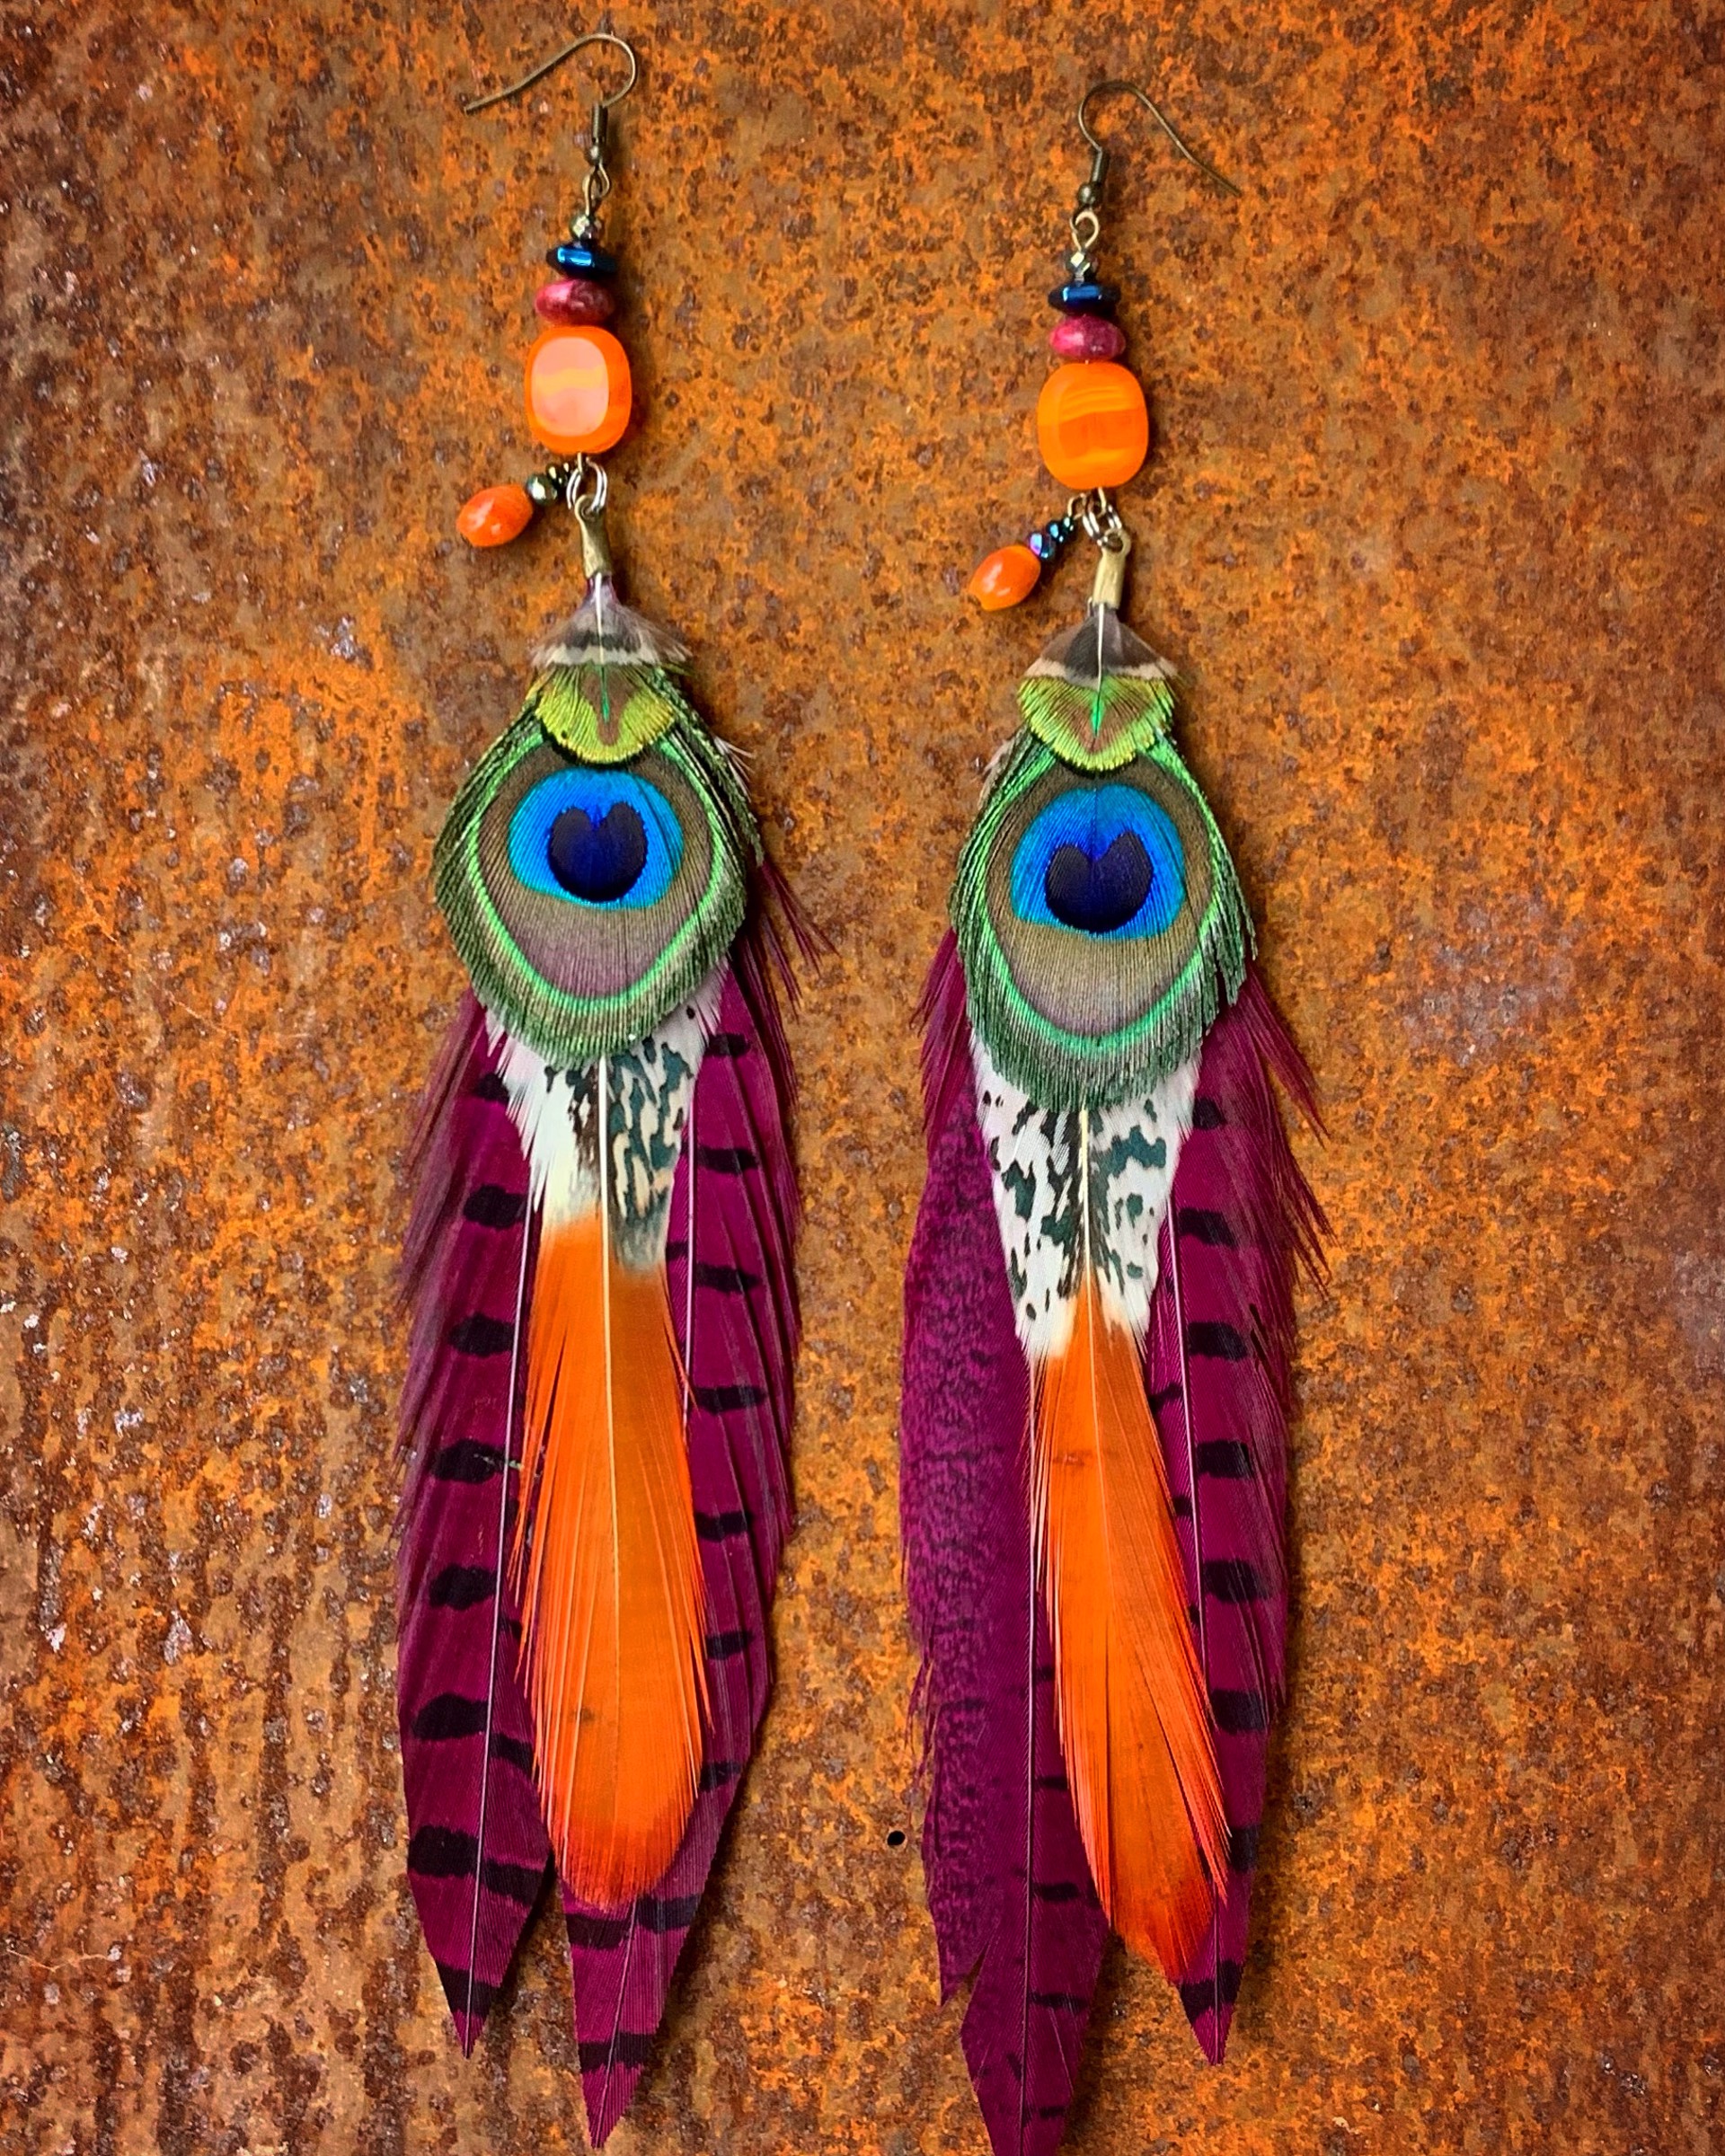 K603 Fuchsia Feathers Earrings by Kelly Ormsby